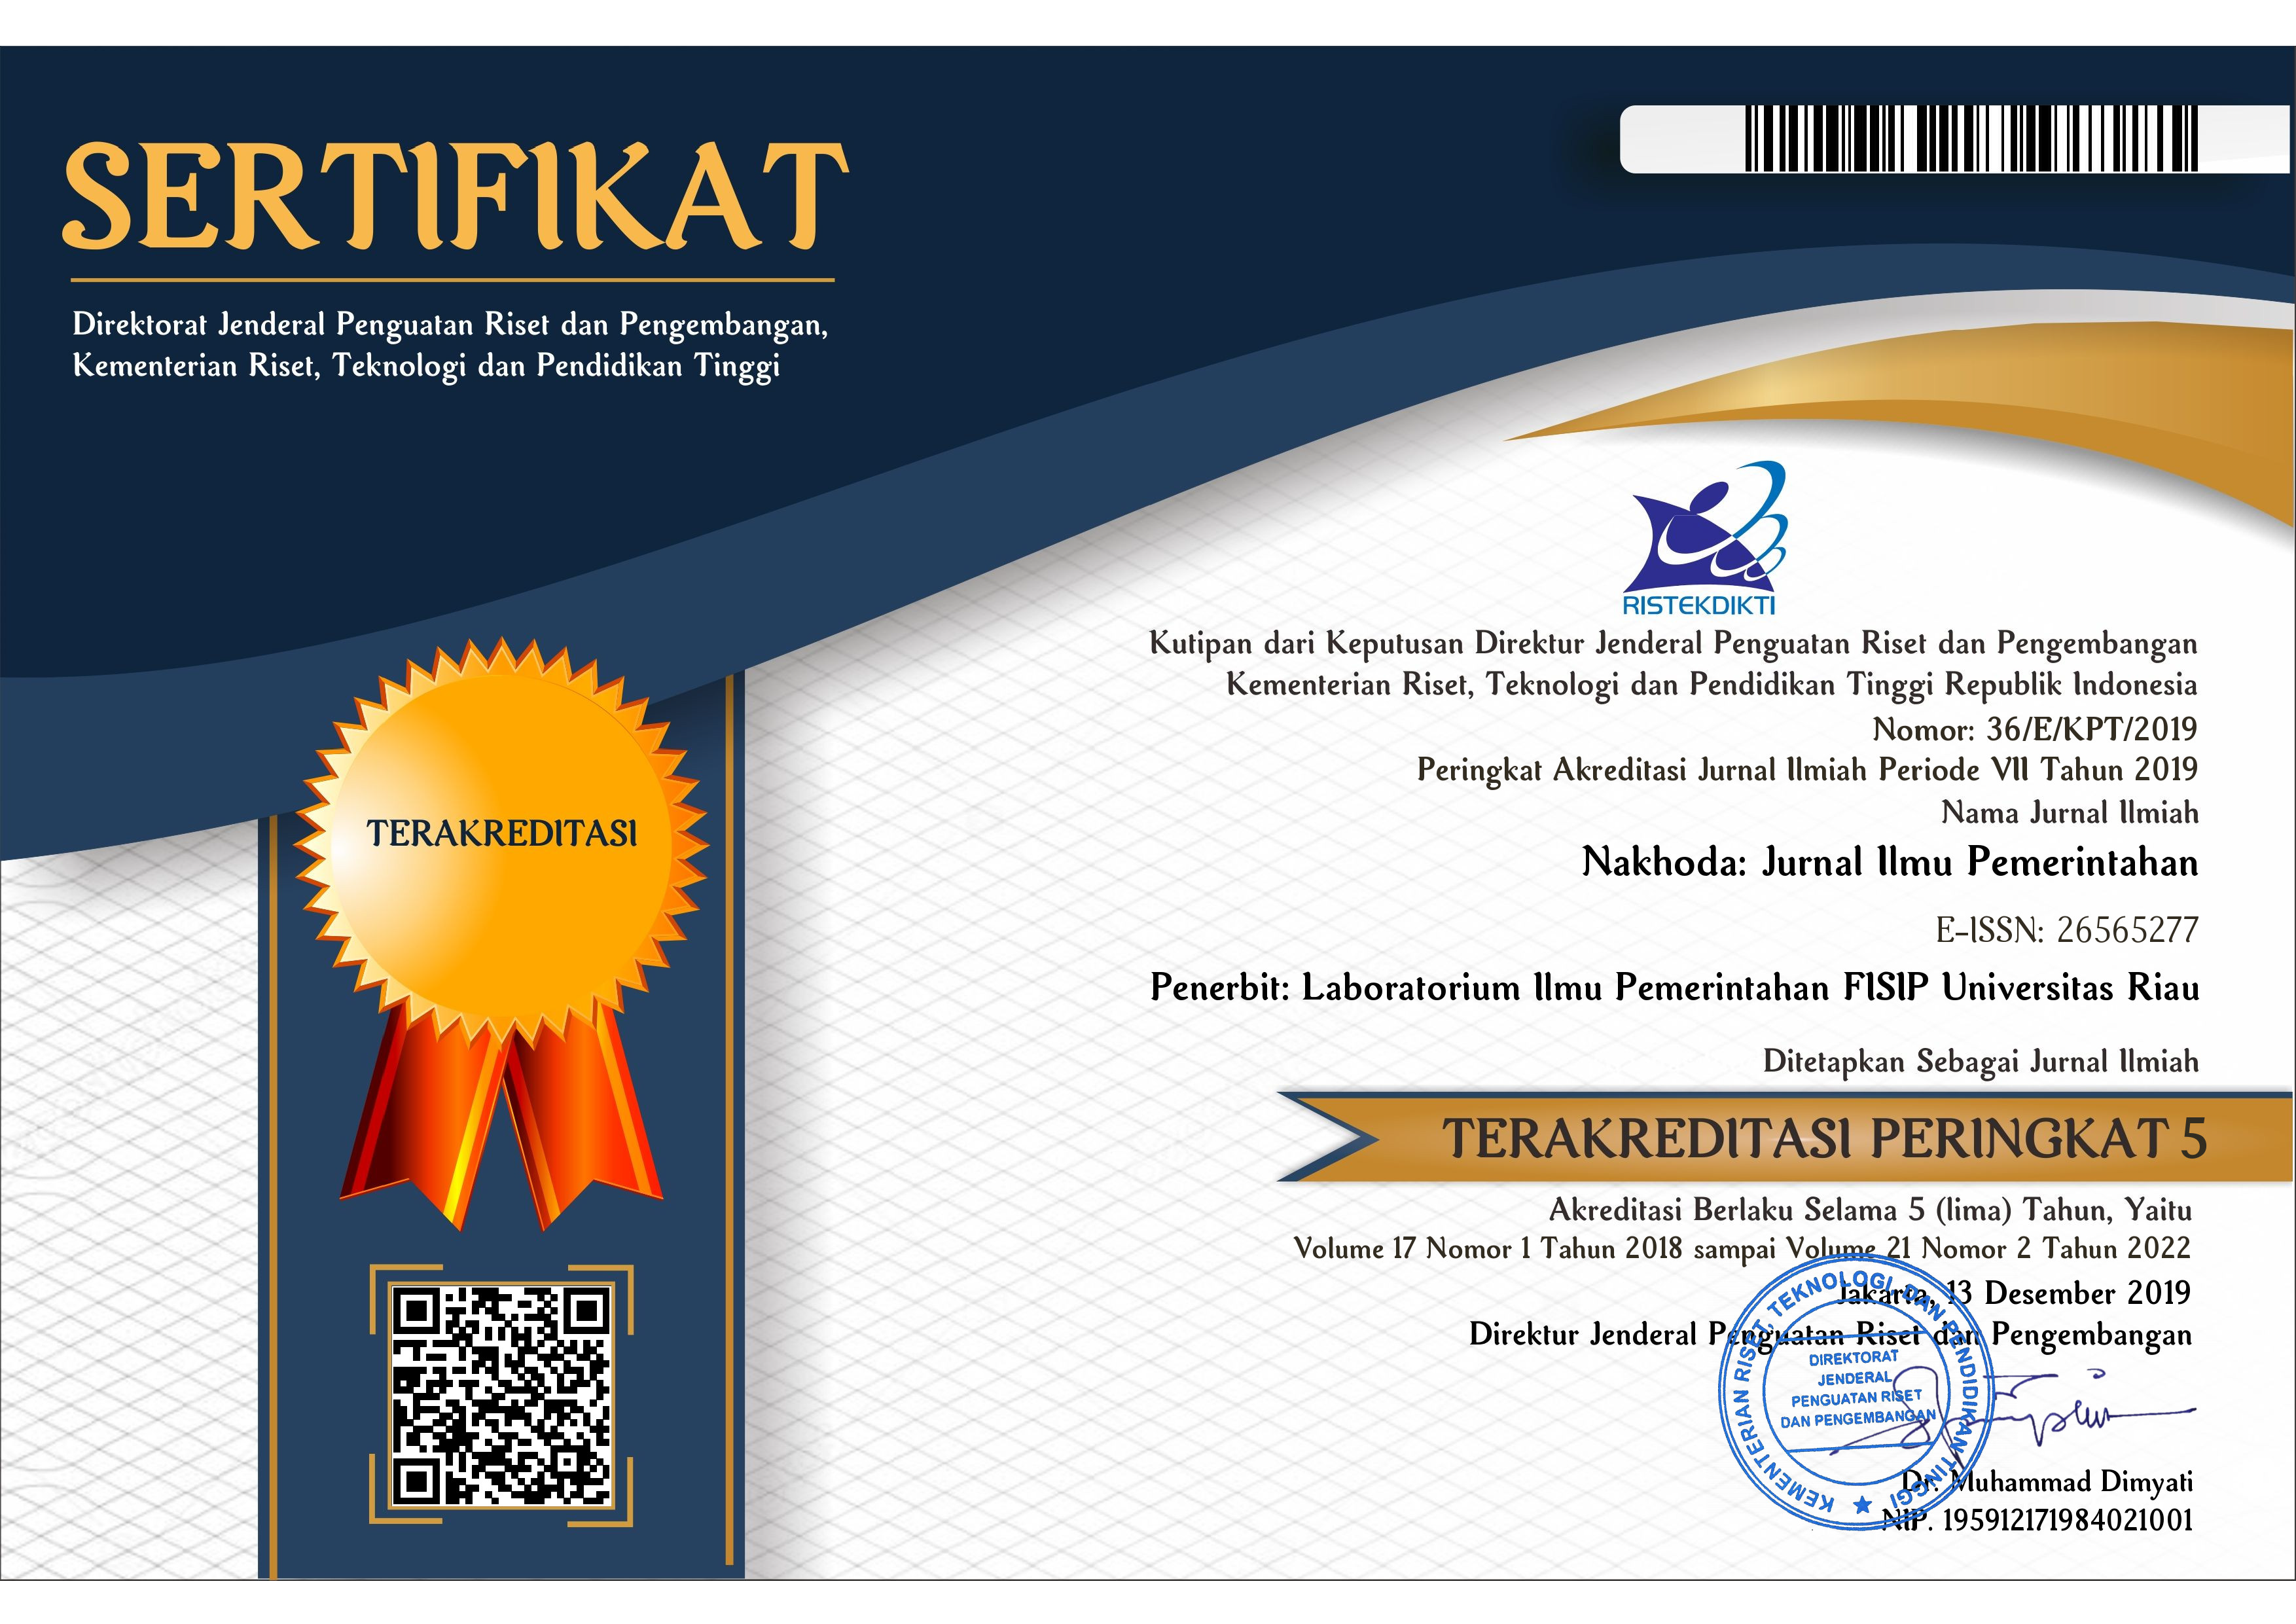 Accreditation Certificate